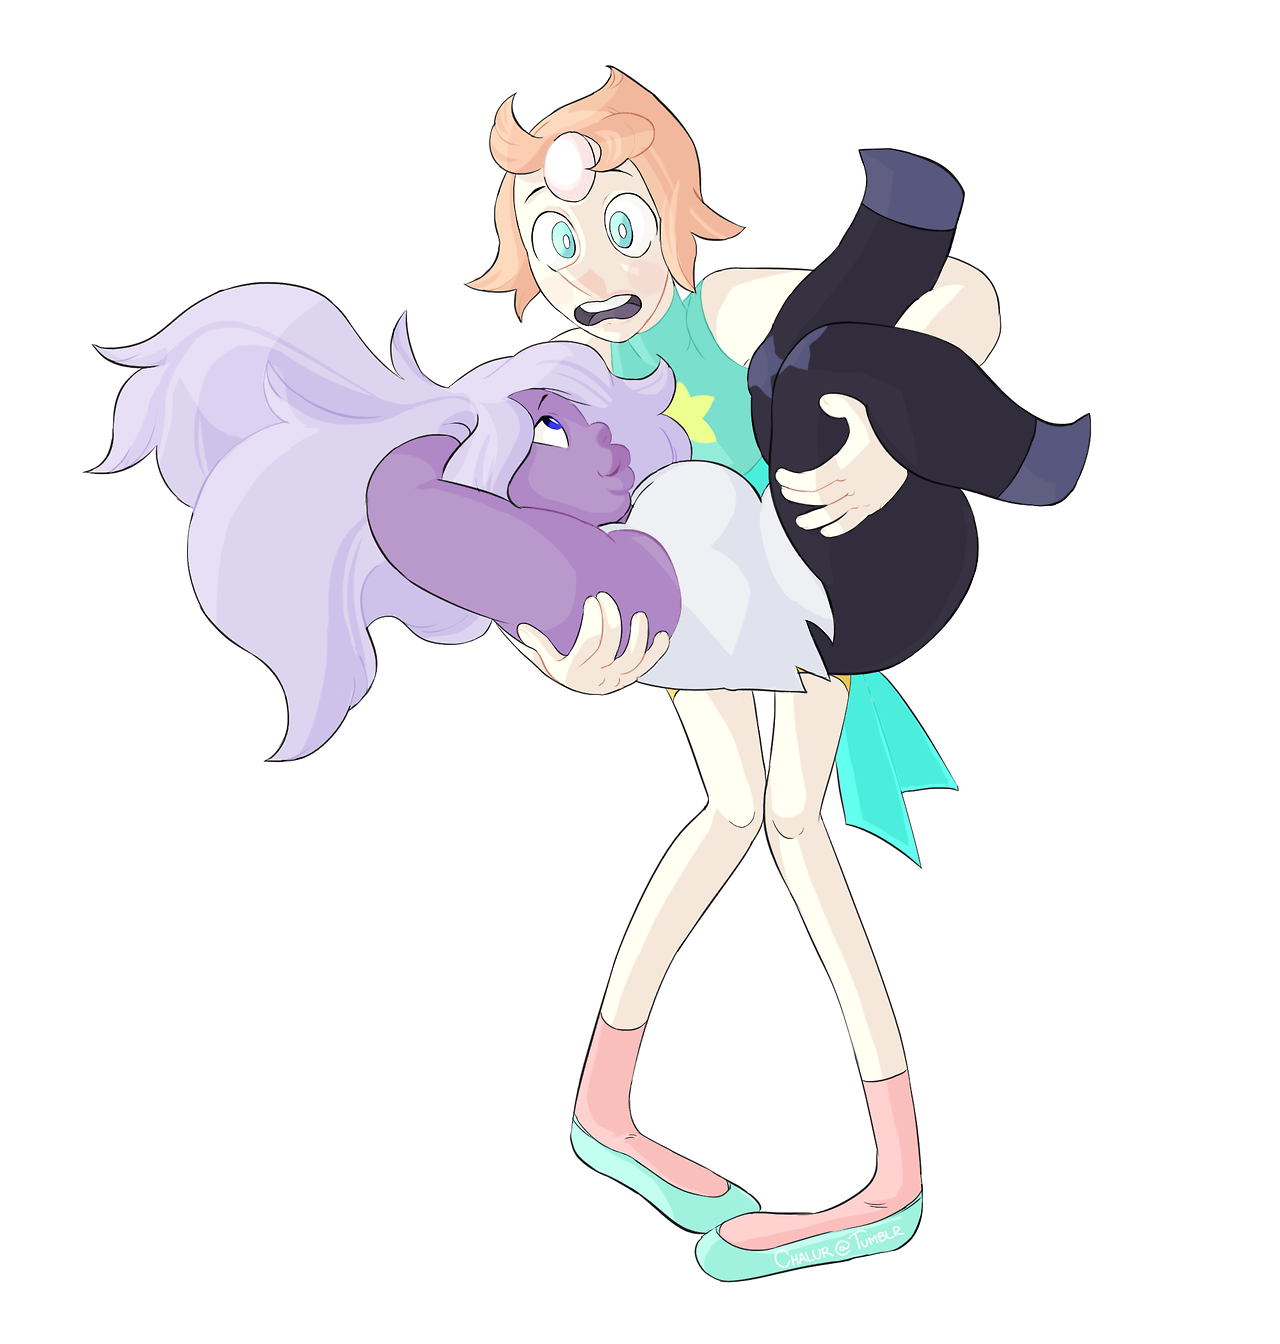 “Hey, Pearl, catch! ”